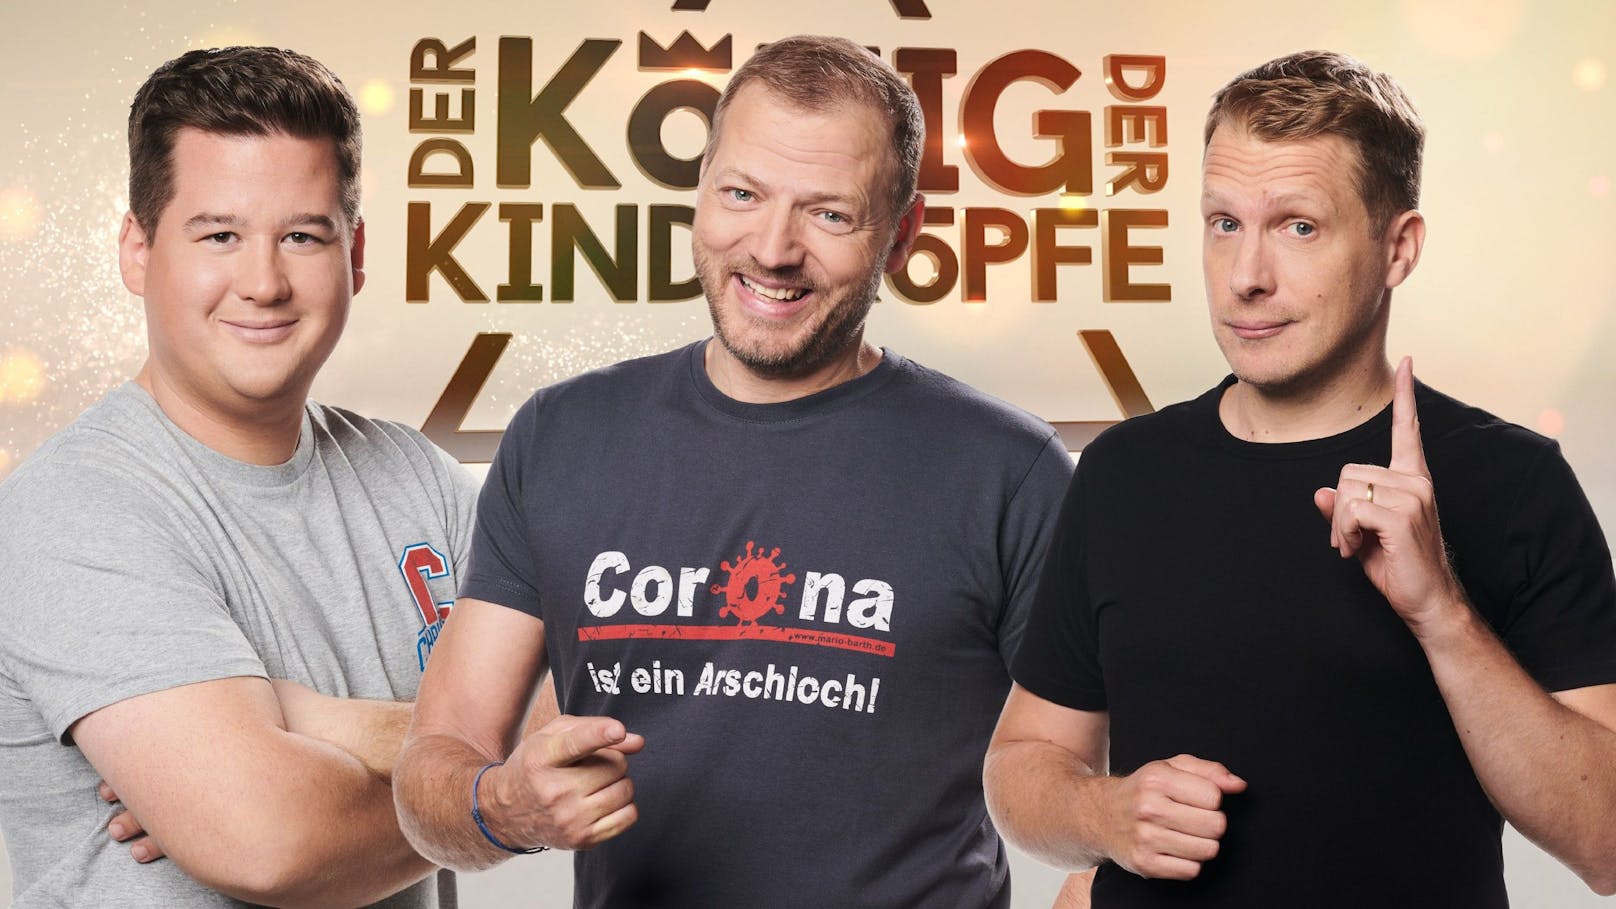 Drei Comedians auf dem Prüfstand: (v.li.) <strong>Chris Tall</strong>, <strong>Mario Barth</strong> und <strong>Oliver Pocher</strong> messen sich in der TV-Show "König der Kindsköpfe".